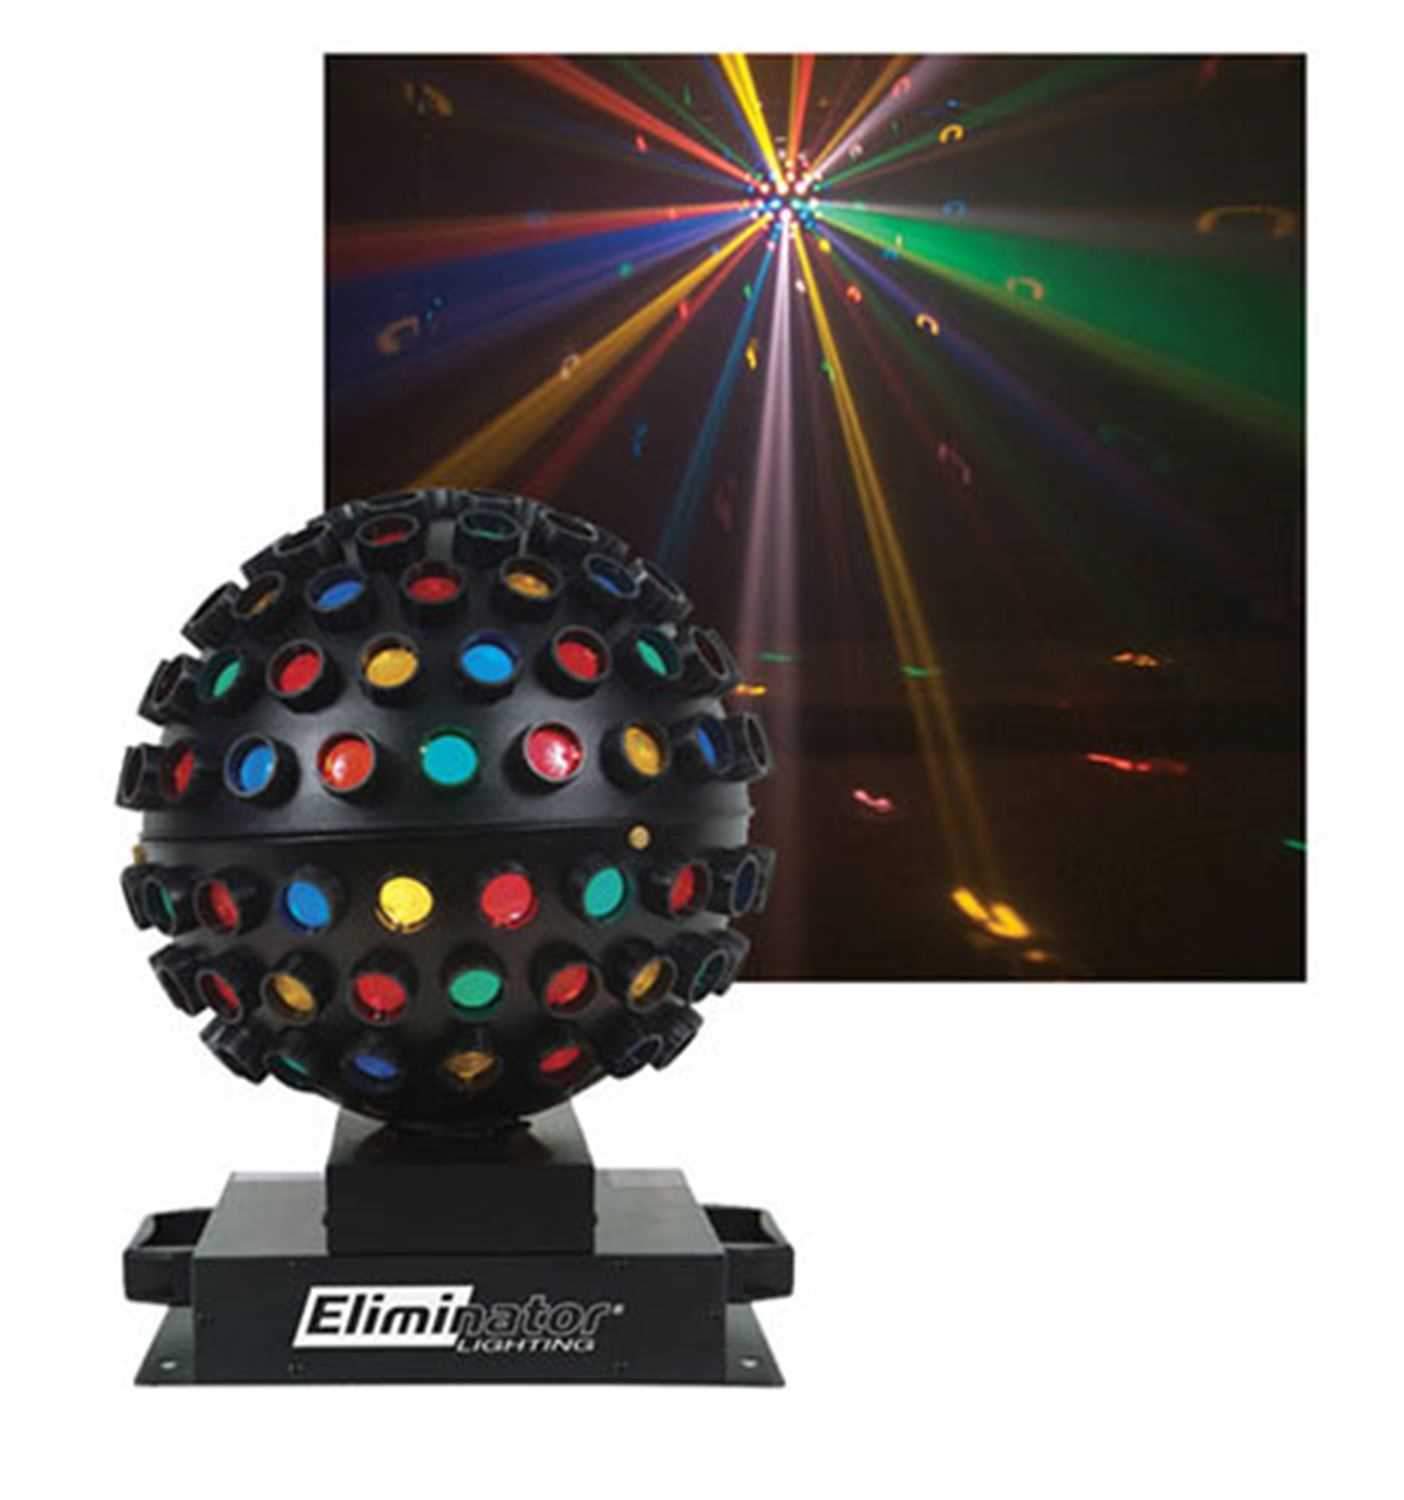 Eliminator Iosphere Rotating Centerpiece FX Light - ProSound and Stage Lighting